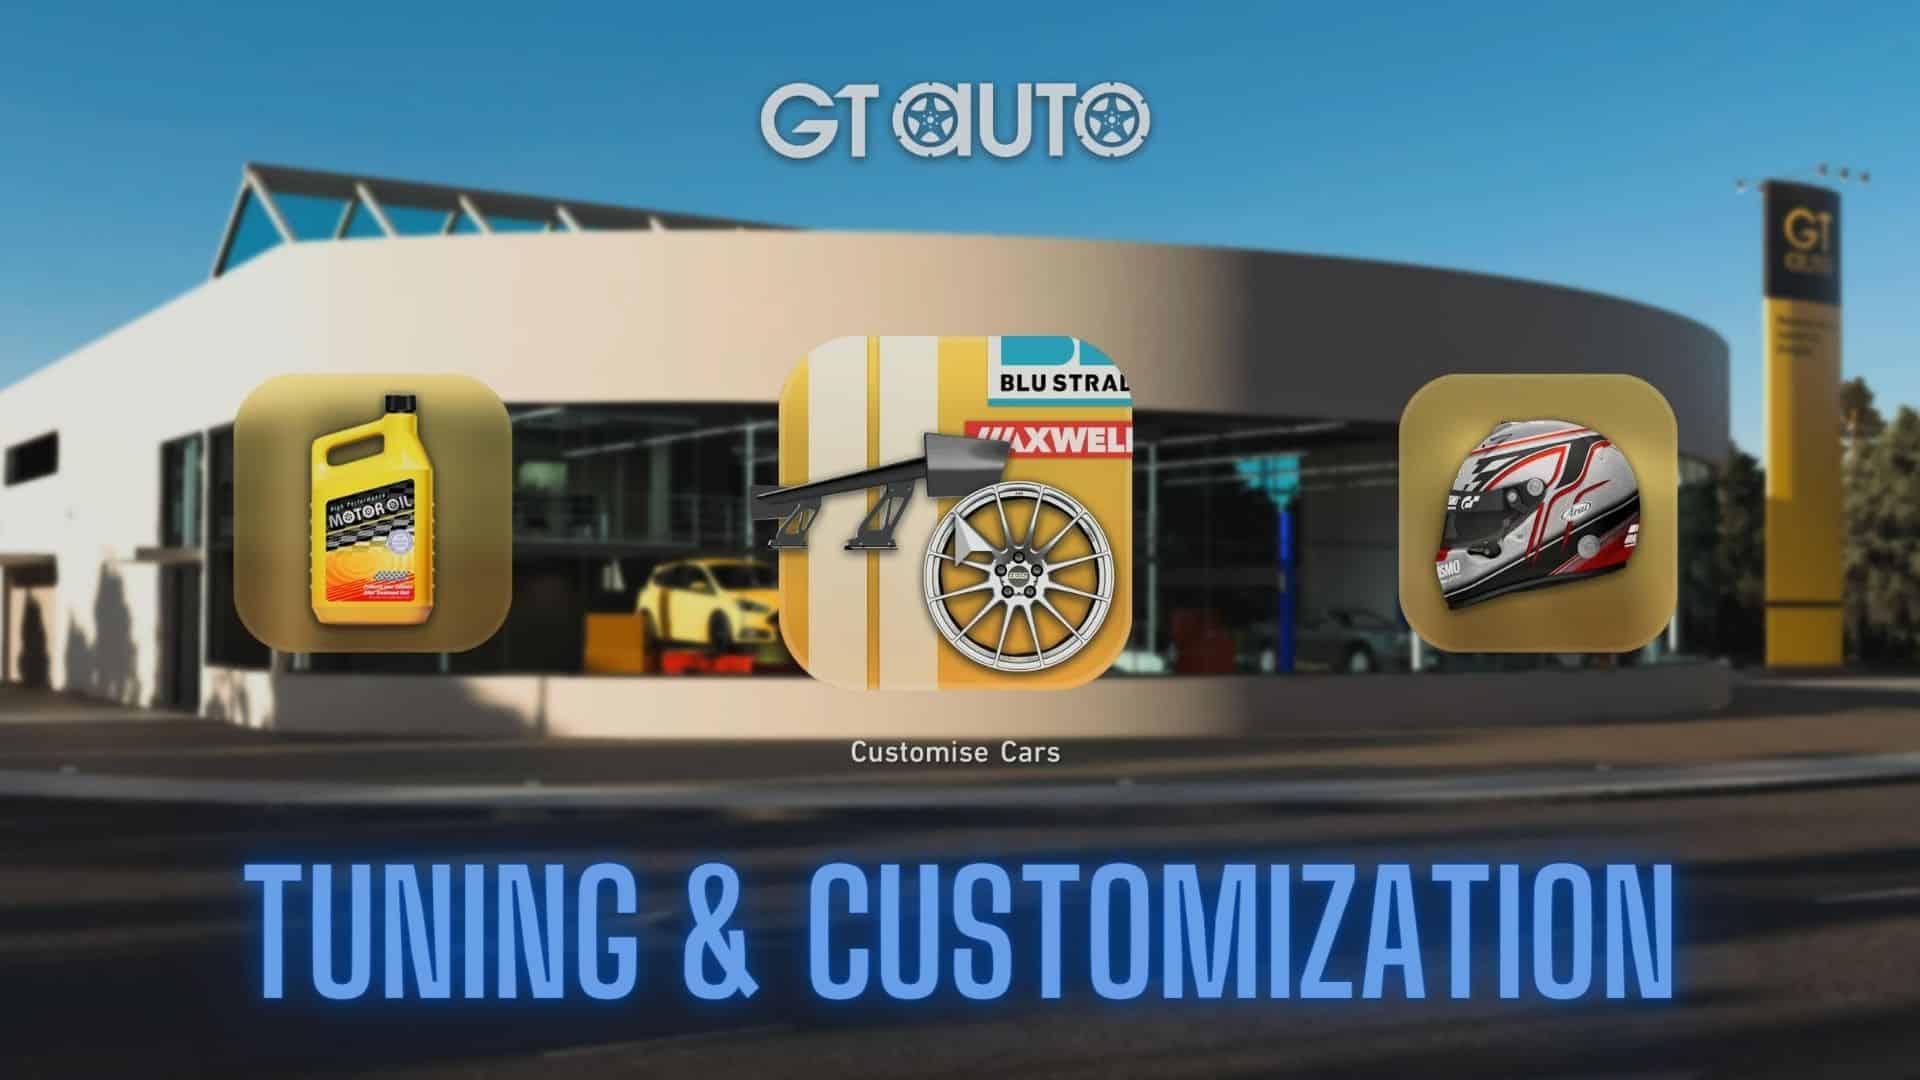 gran turismo 7 GT auto tuning